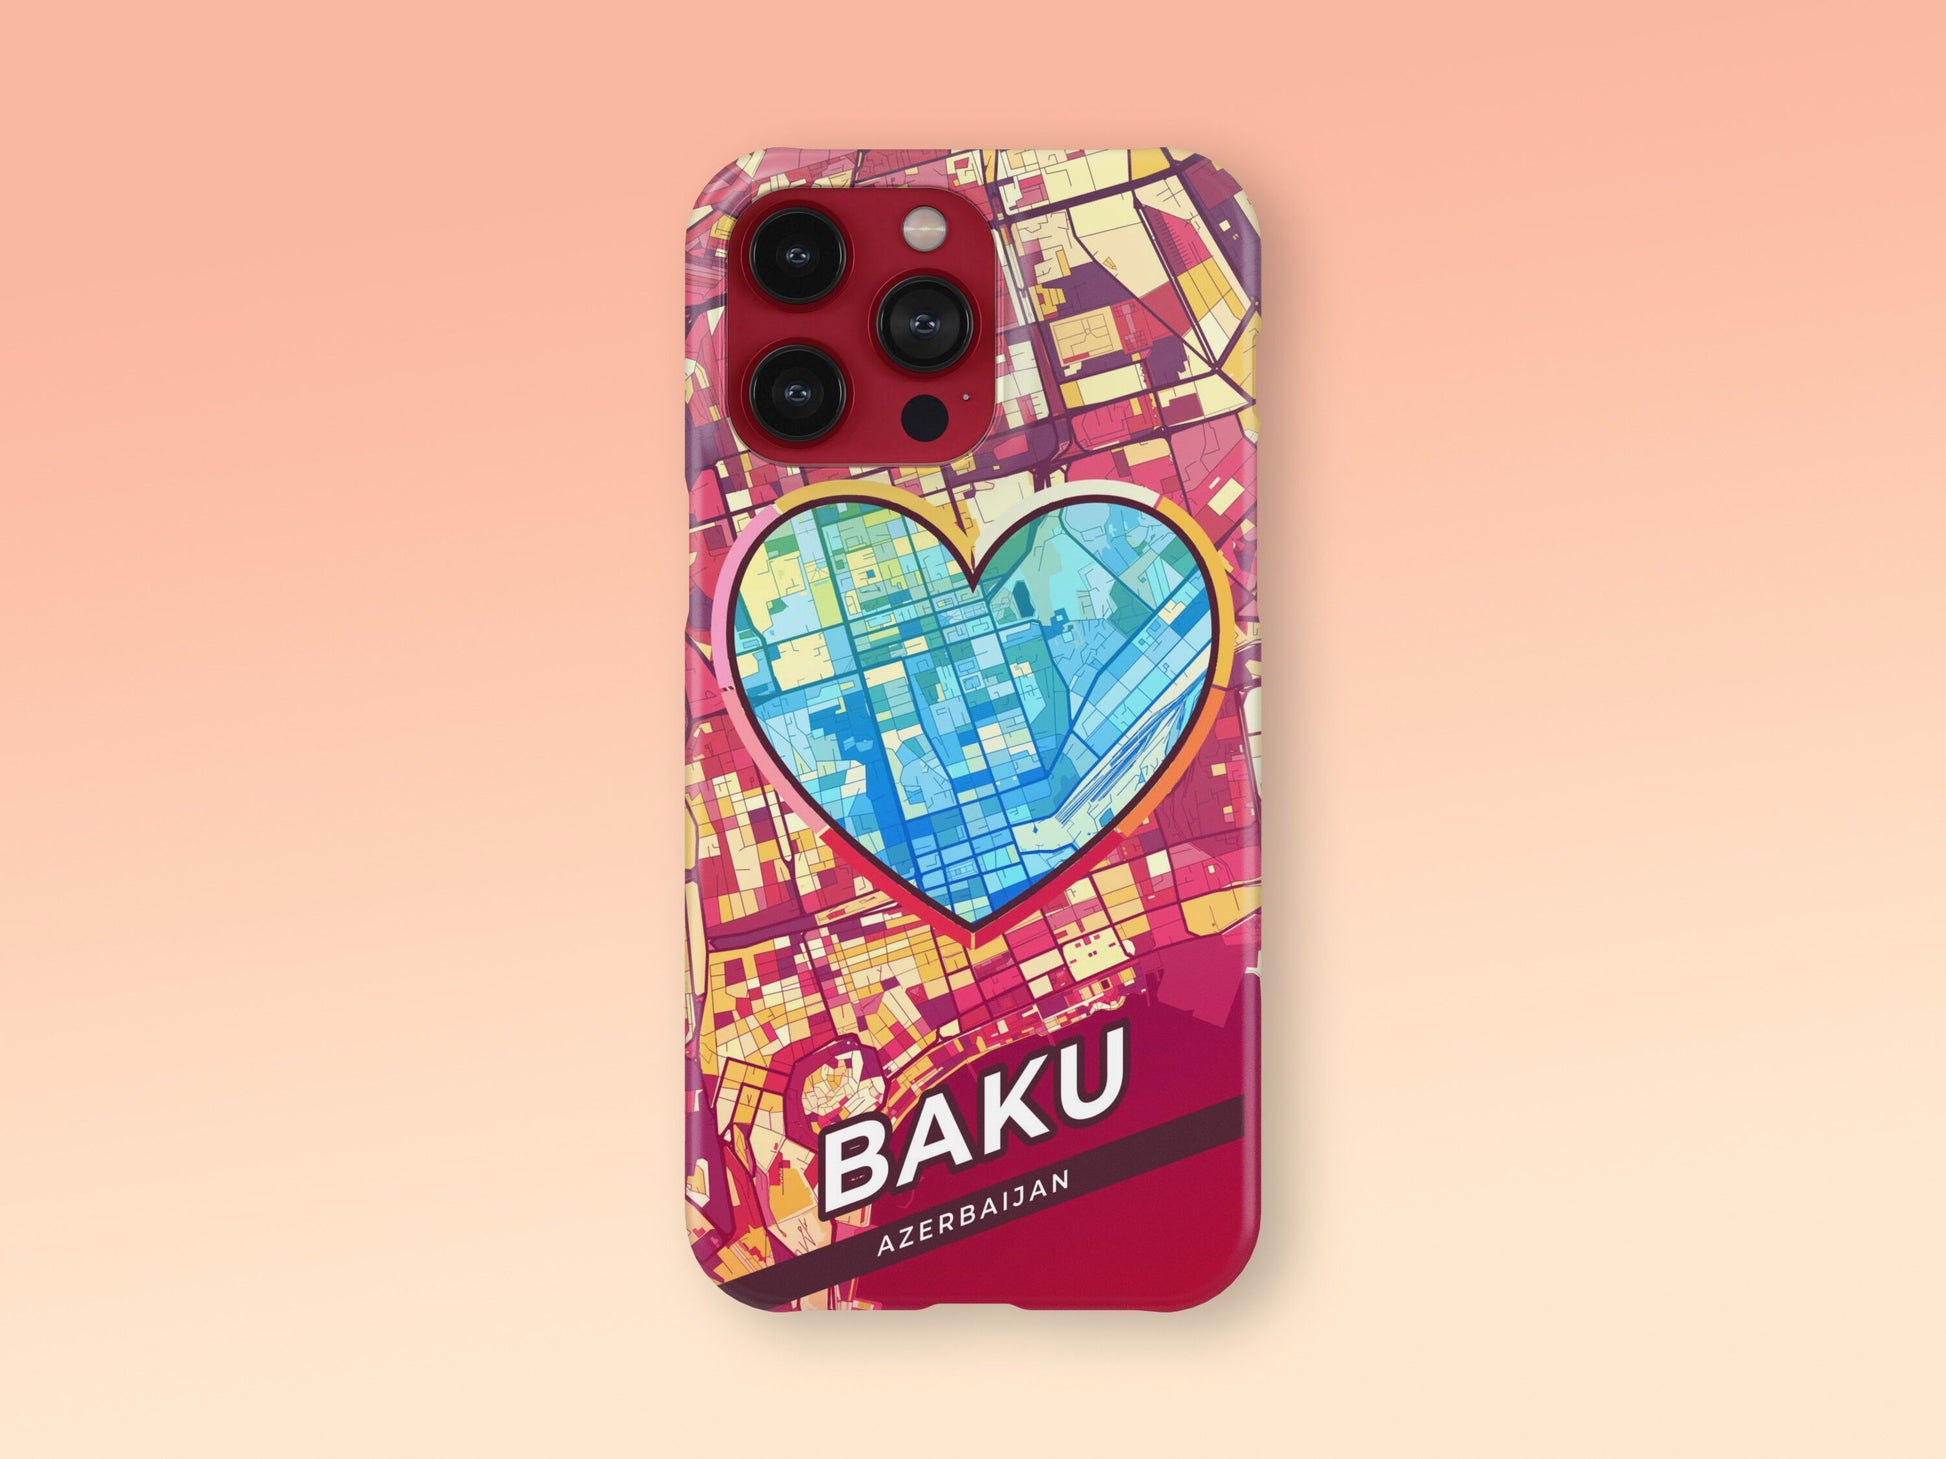 Baku Azerbaijan slim phone case with colorful icon. Birthday, wedding or housewarming gift. Couple match cases. 2